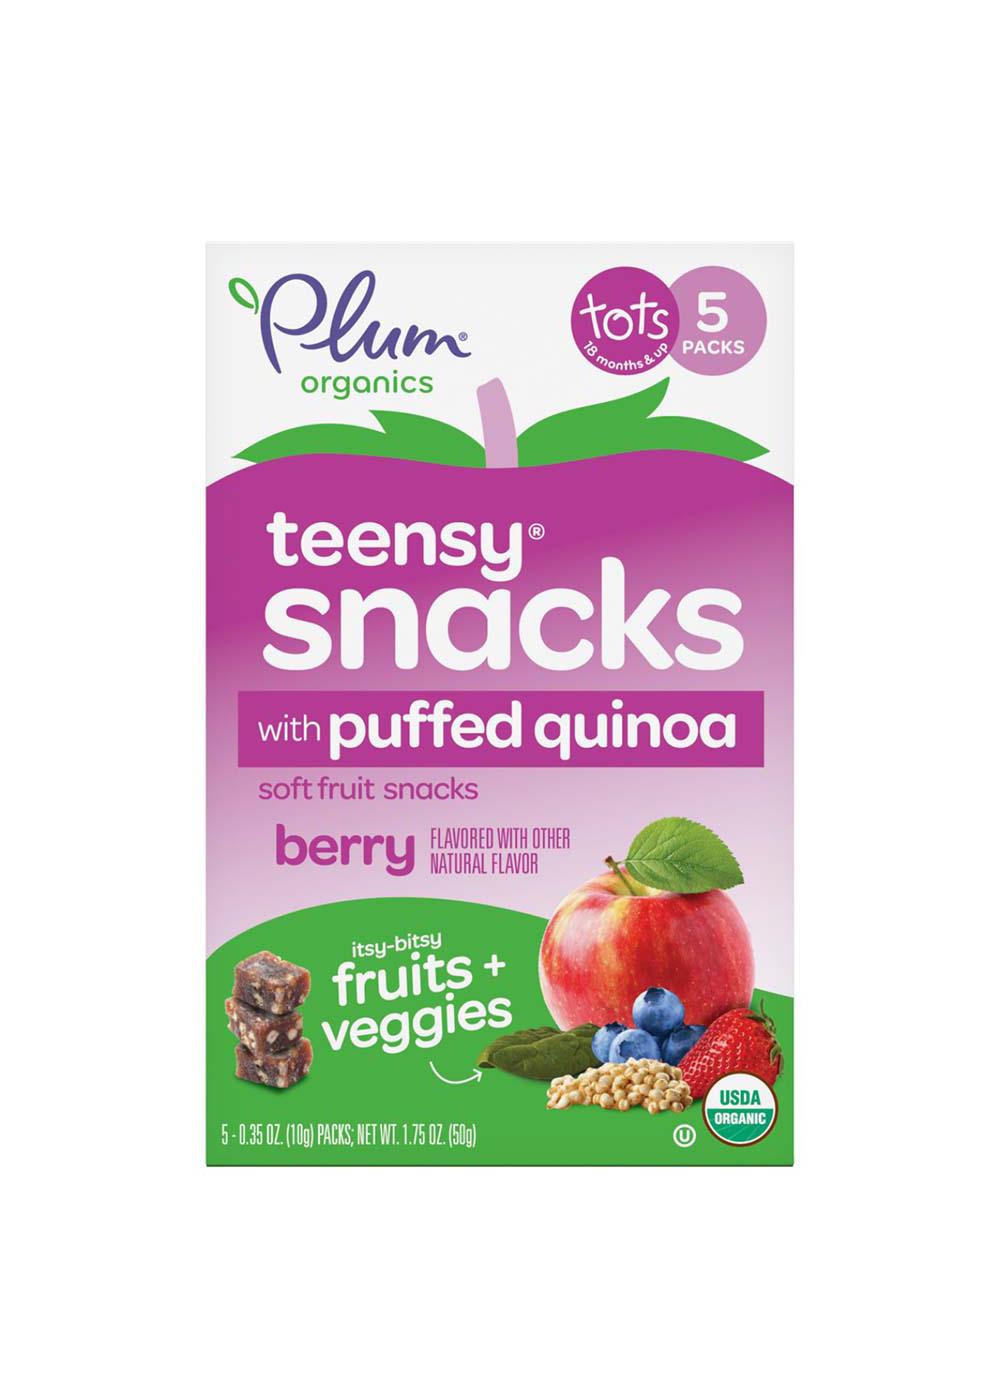 Plum Organics Teensy Snacks with Puffed Quinoa - Berry; image 1 of 5